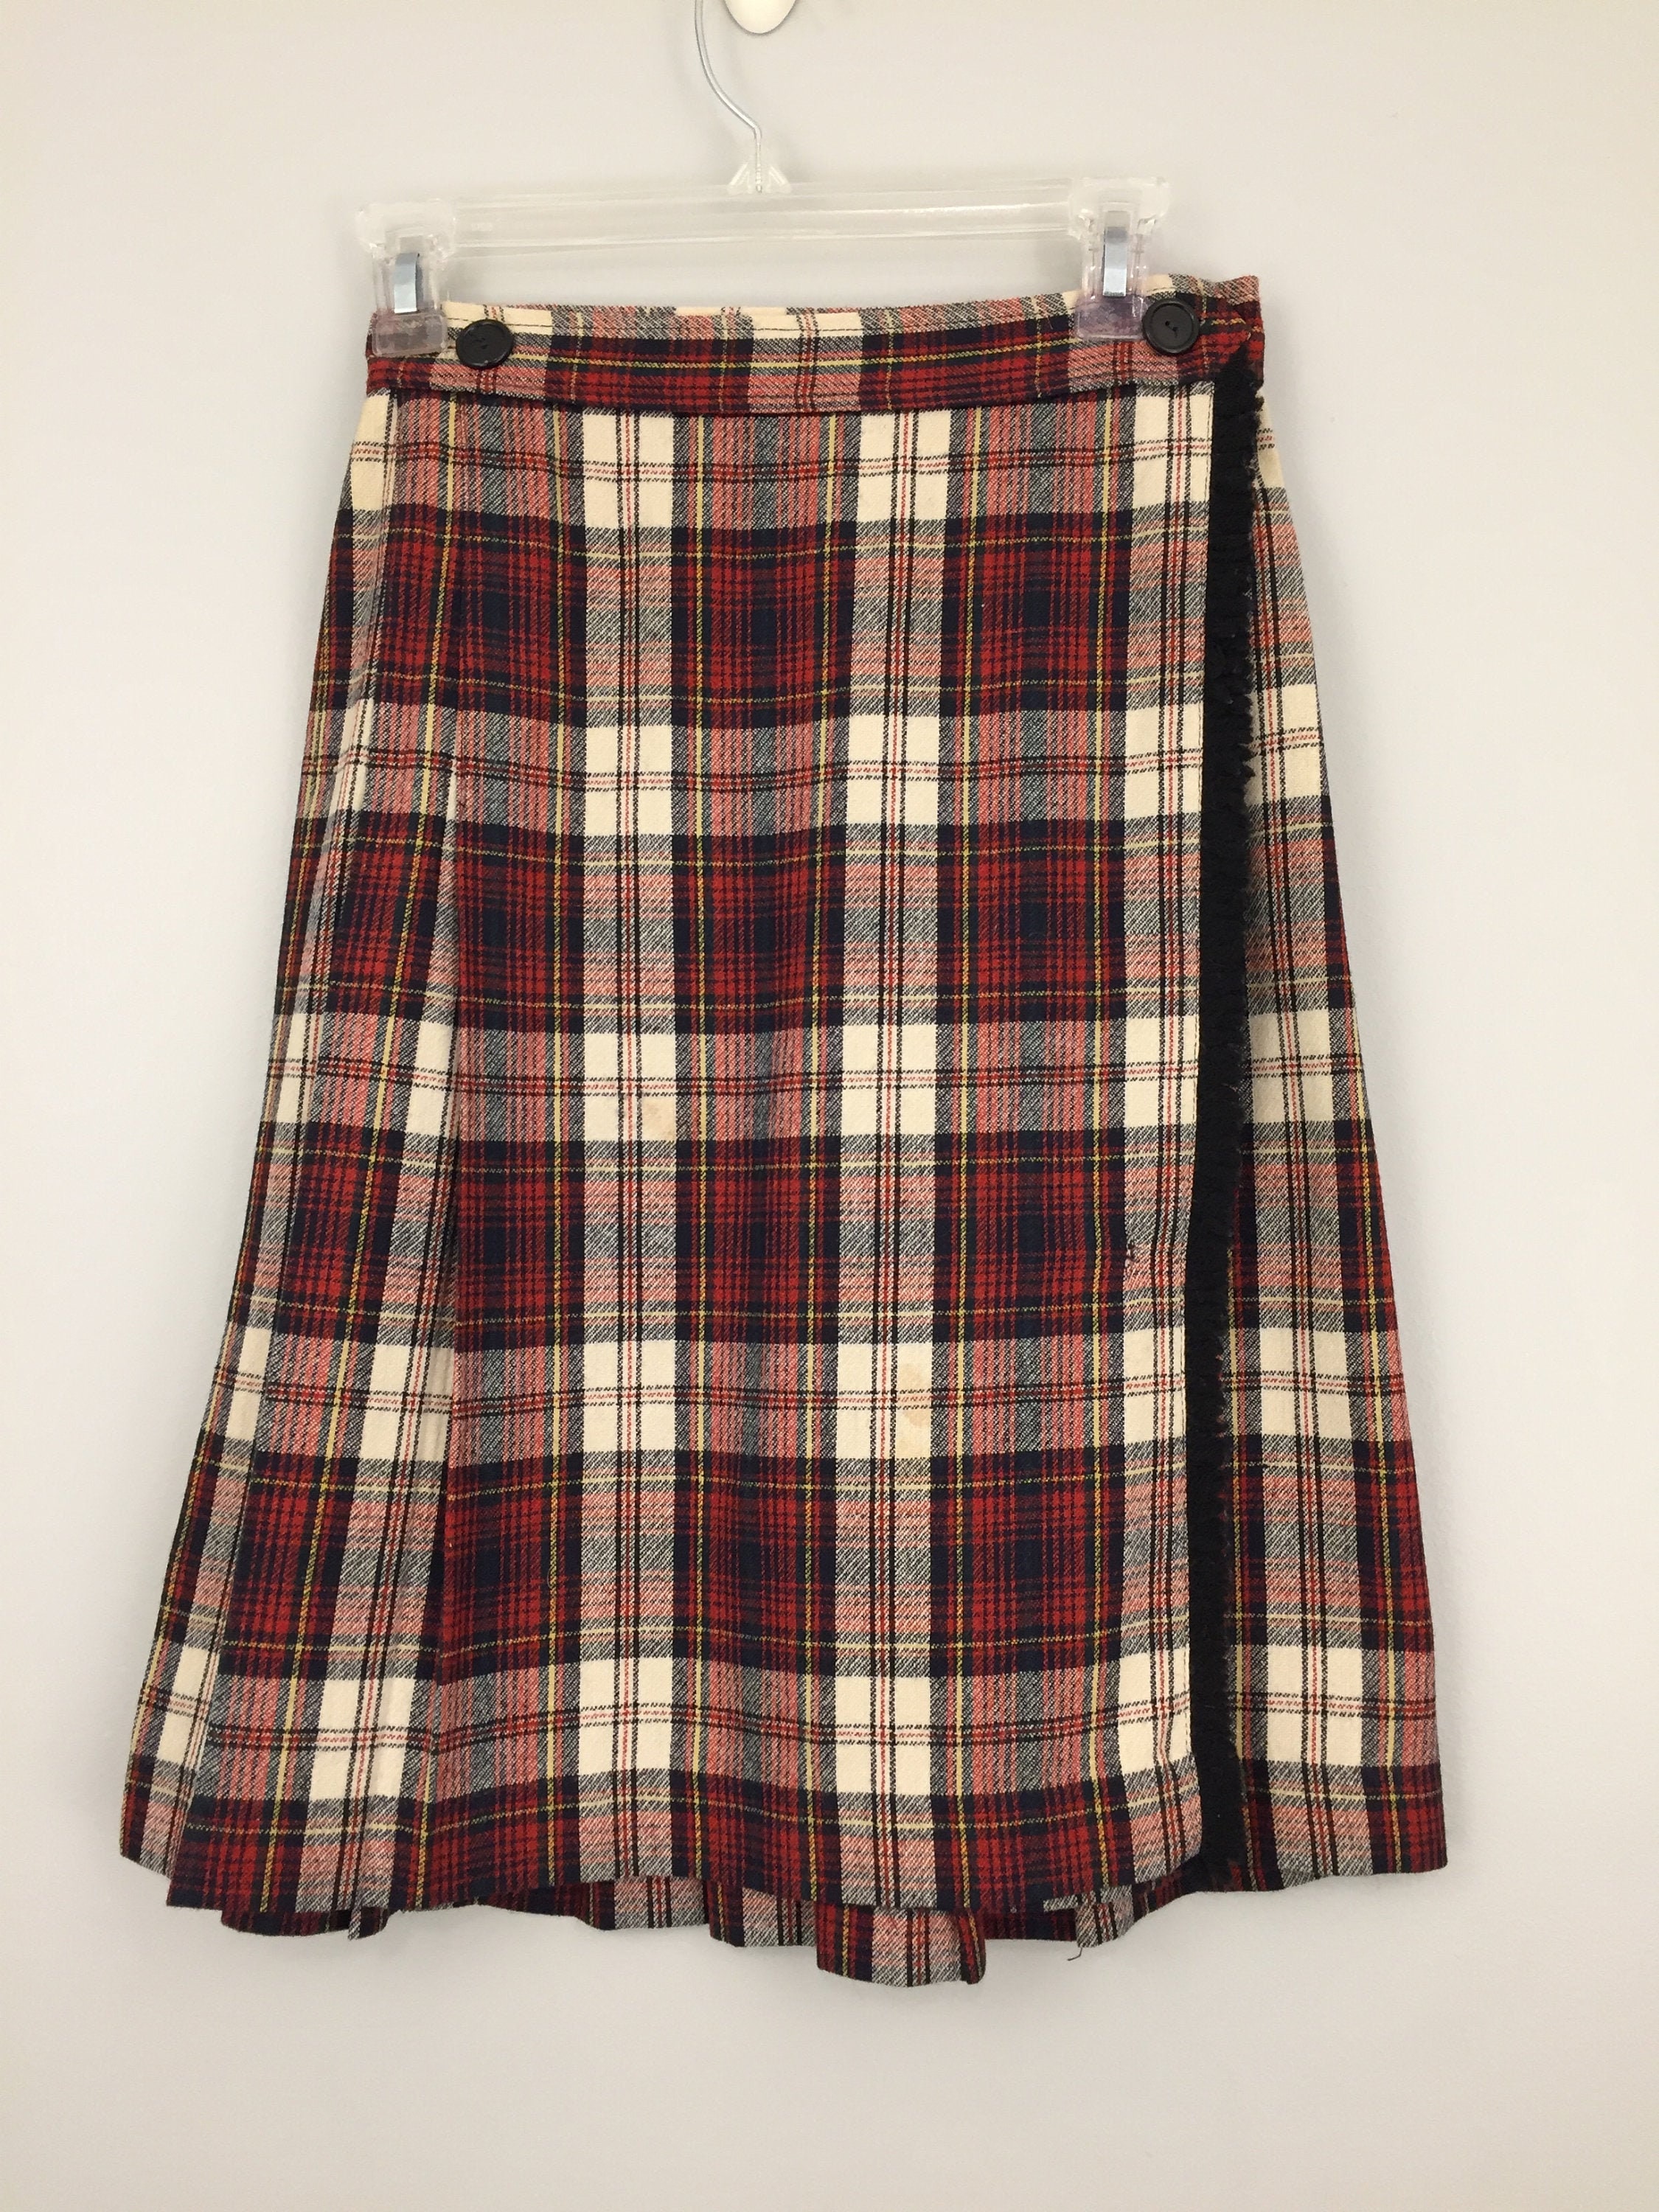 Tartan Plaid Skirt Wool Blend Wrap Fringe Drop Pleat Women Small Red Blue White Vintage Clothing Skirts For Winter